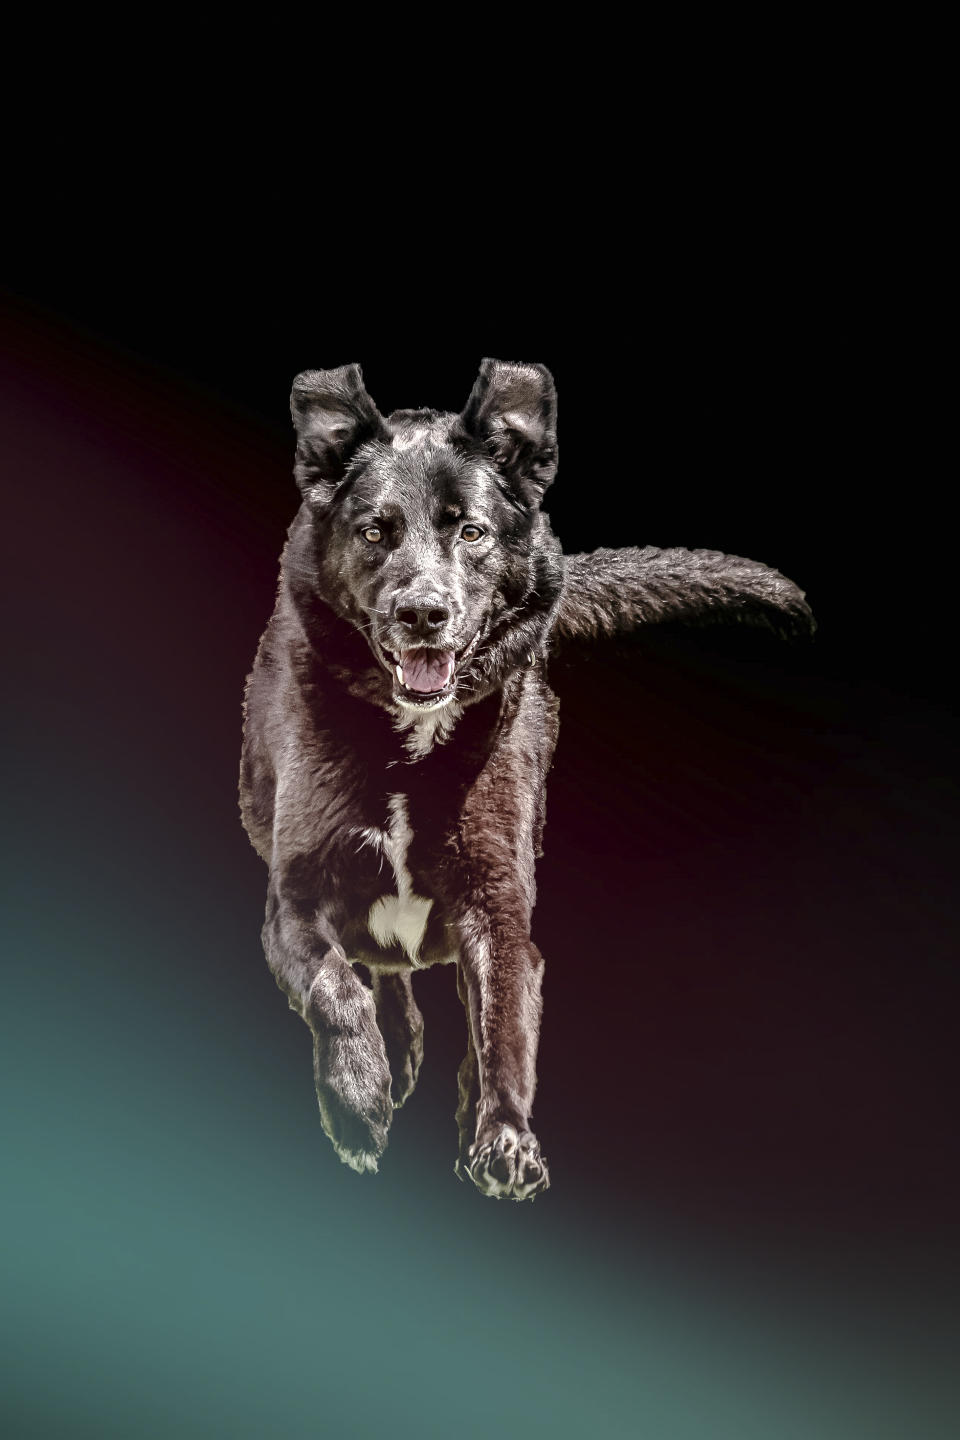 Fliegende Hunde: Optische Täuschung oder neues Phänomen?